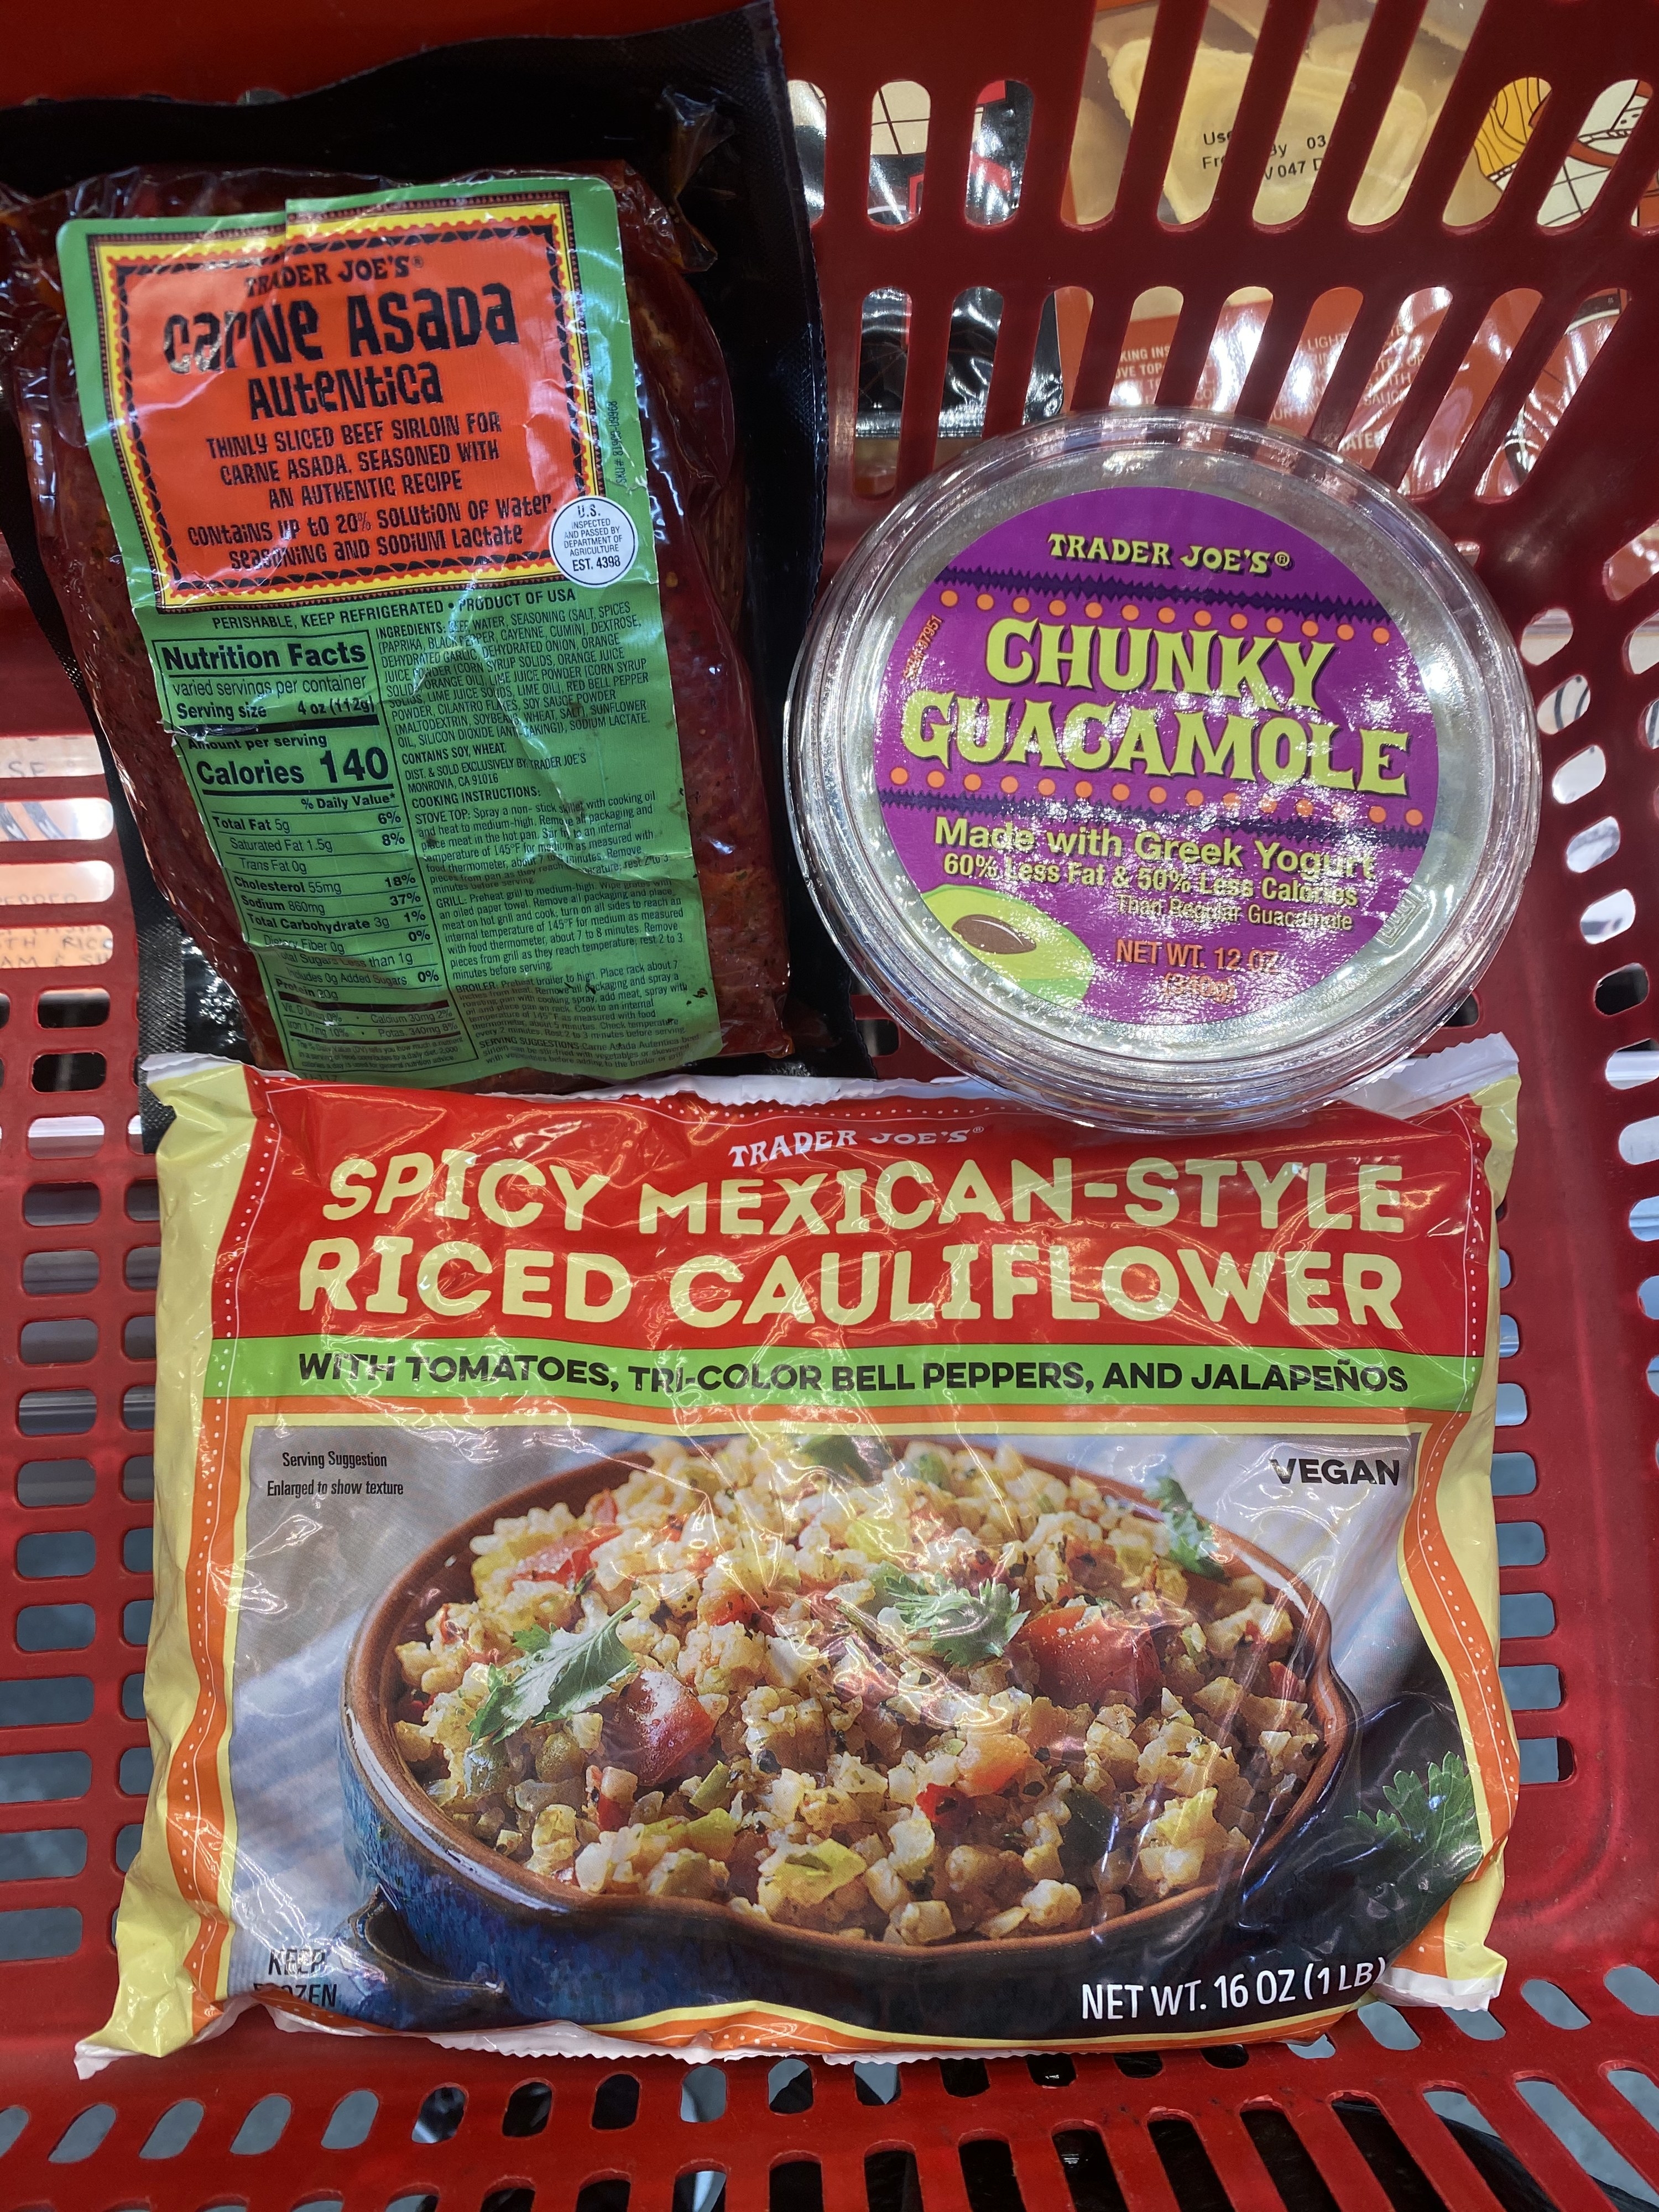 Spicy Mexican-Style Riced Cauliflower, Carne Asada Autentica, and Chunky Guacamole